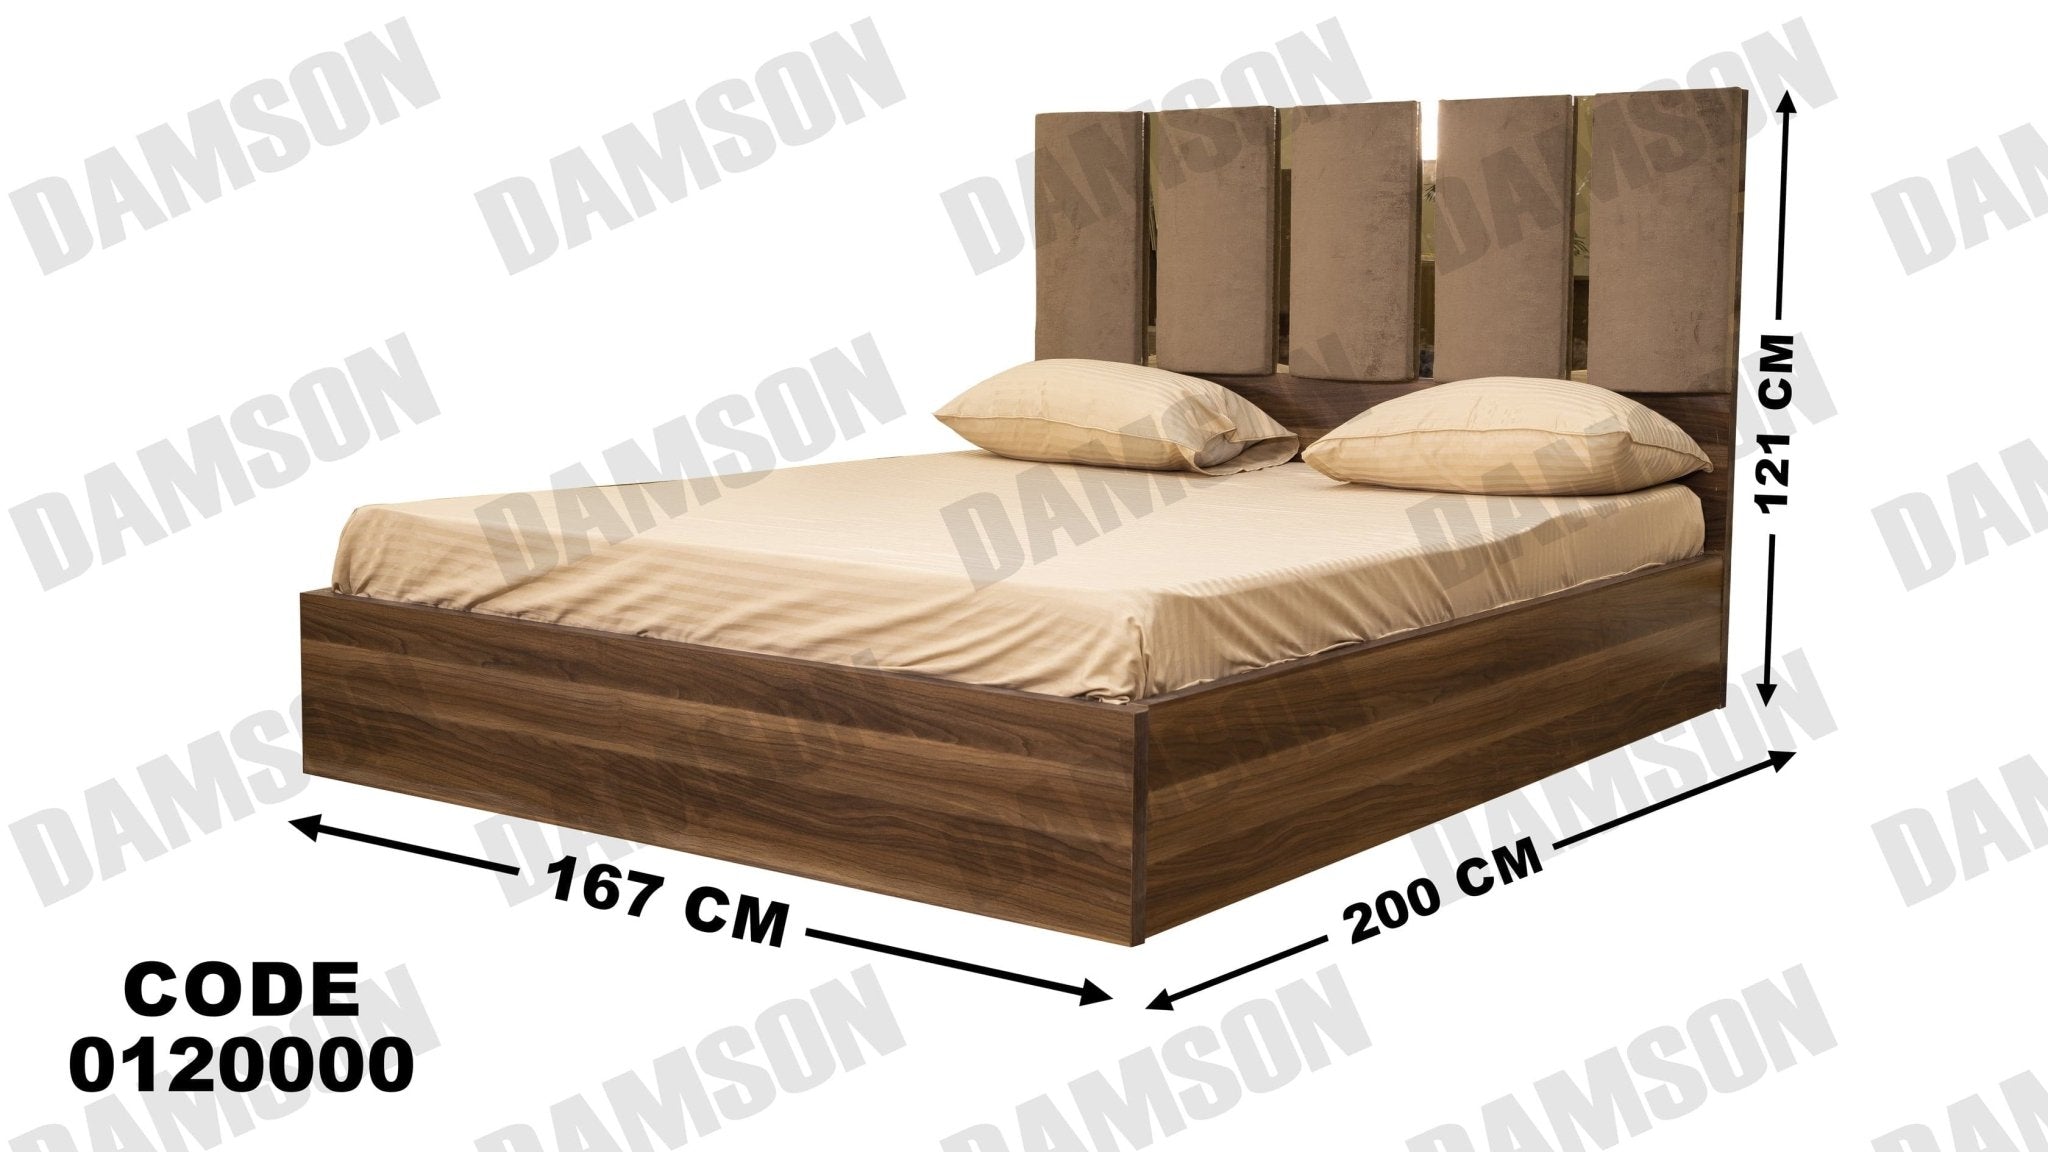 غرفة نوم ماستر 200 - Damson Furnitureغرفة نوم ماستر 200